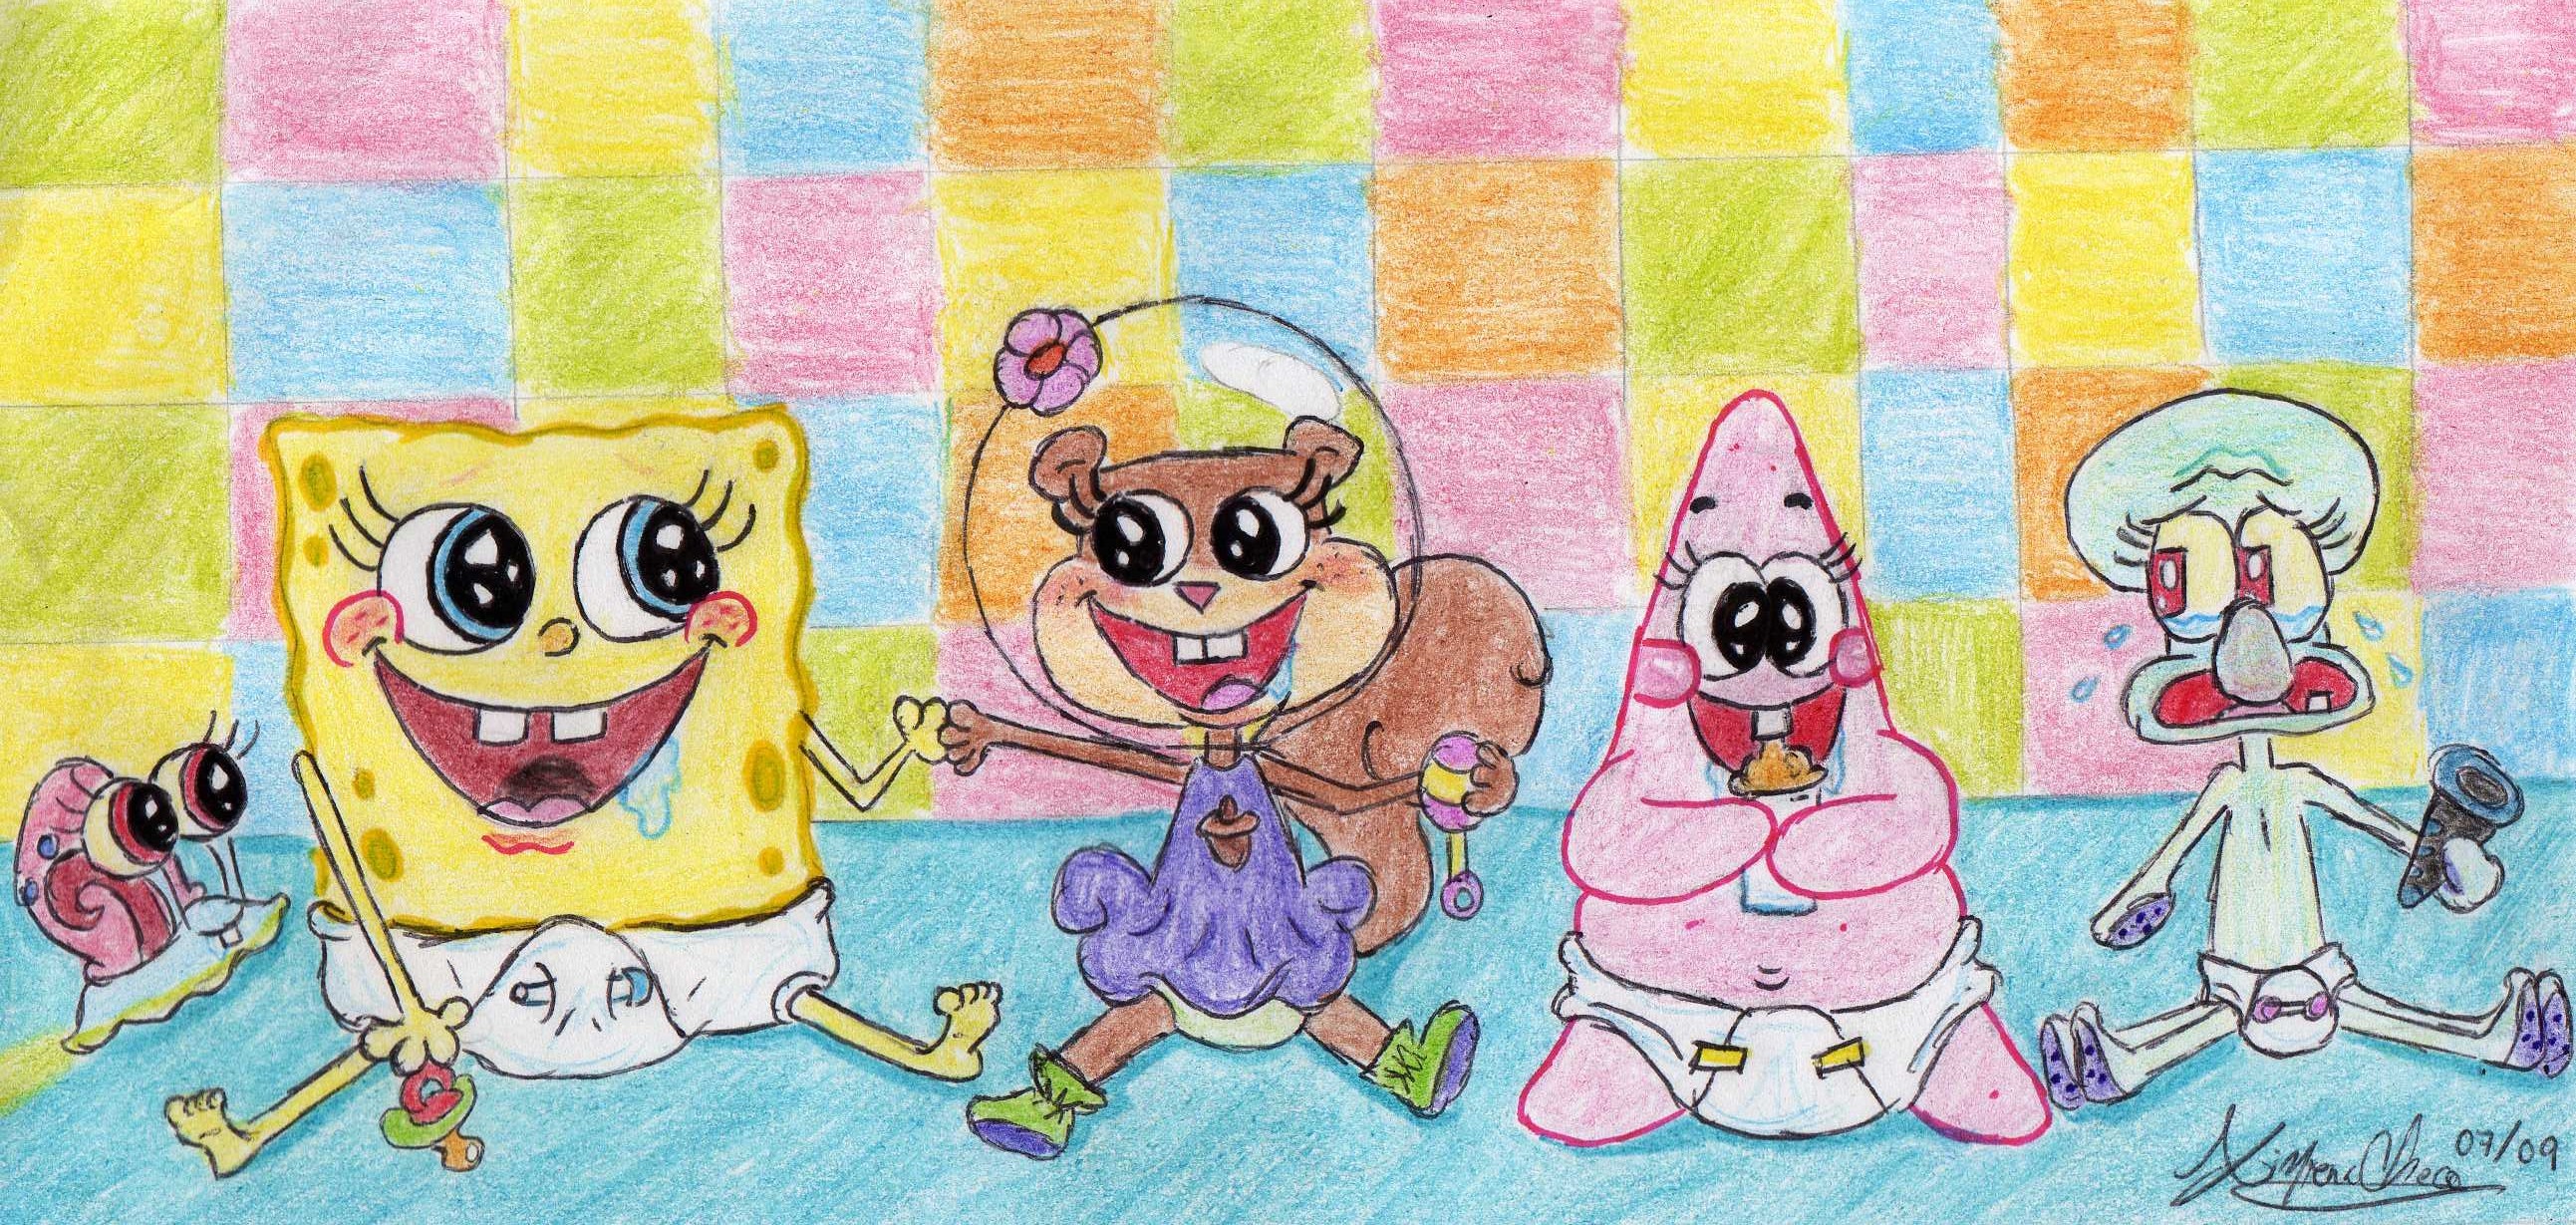 All Spongebob Characters As Babies